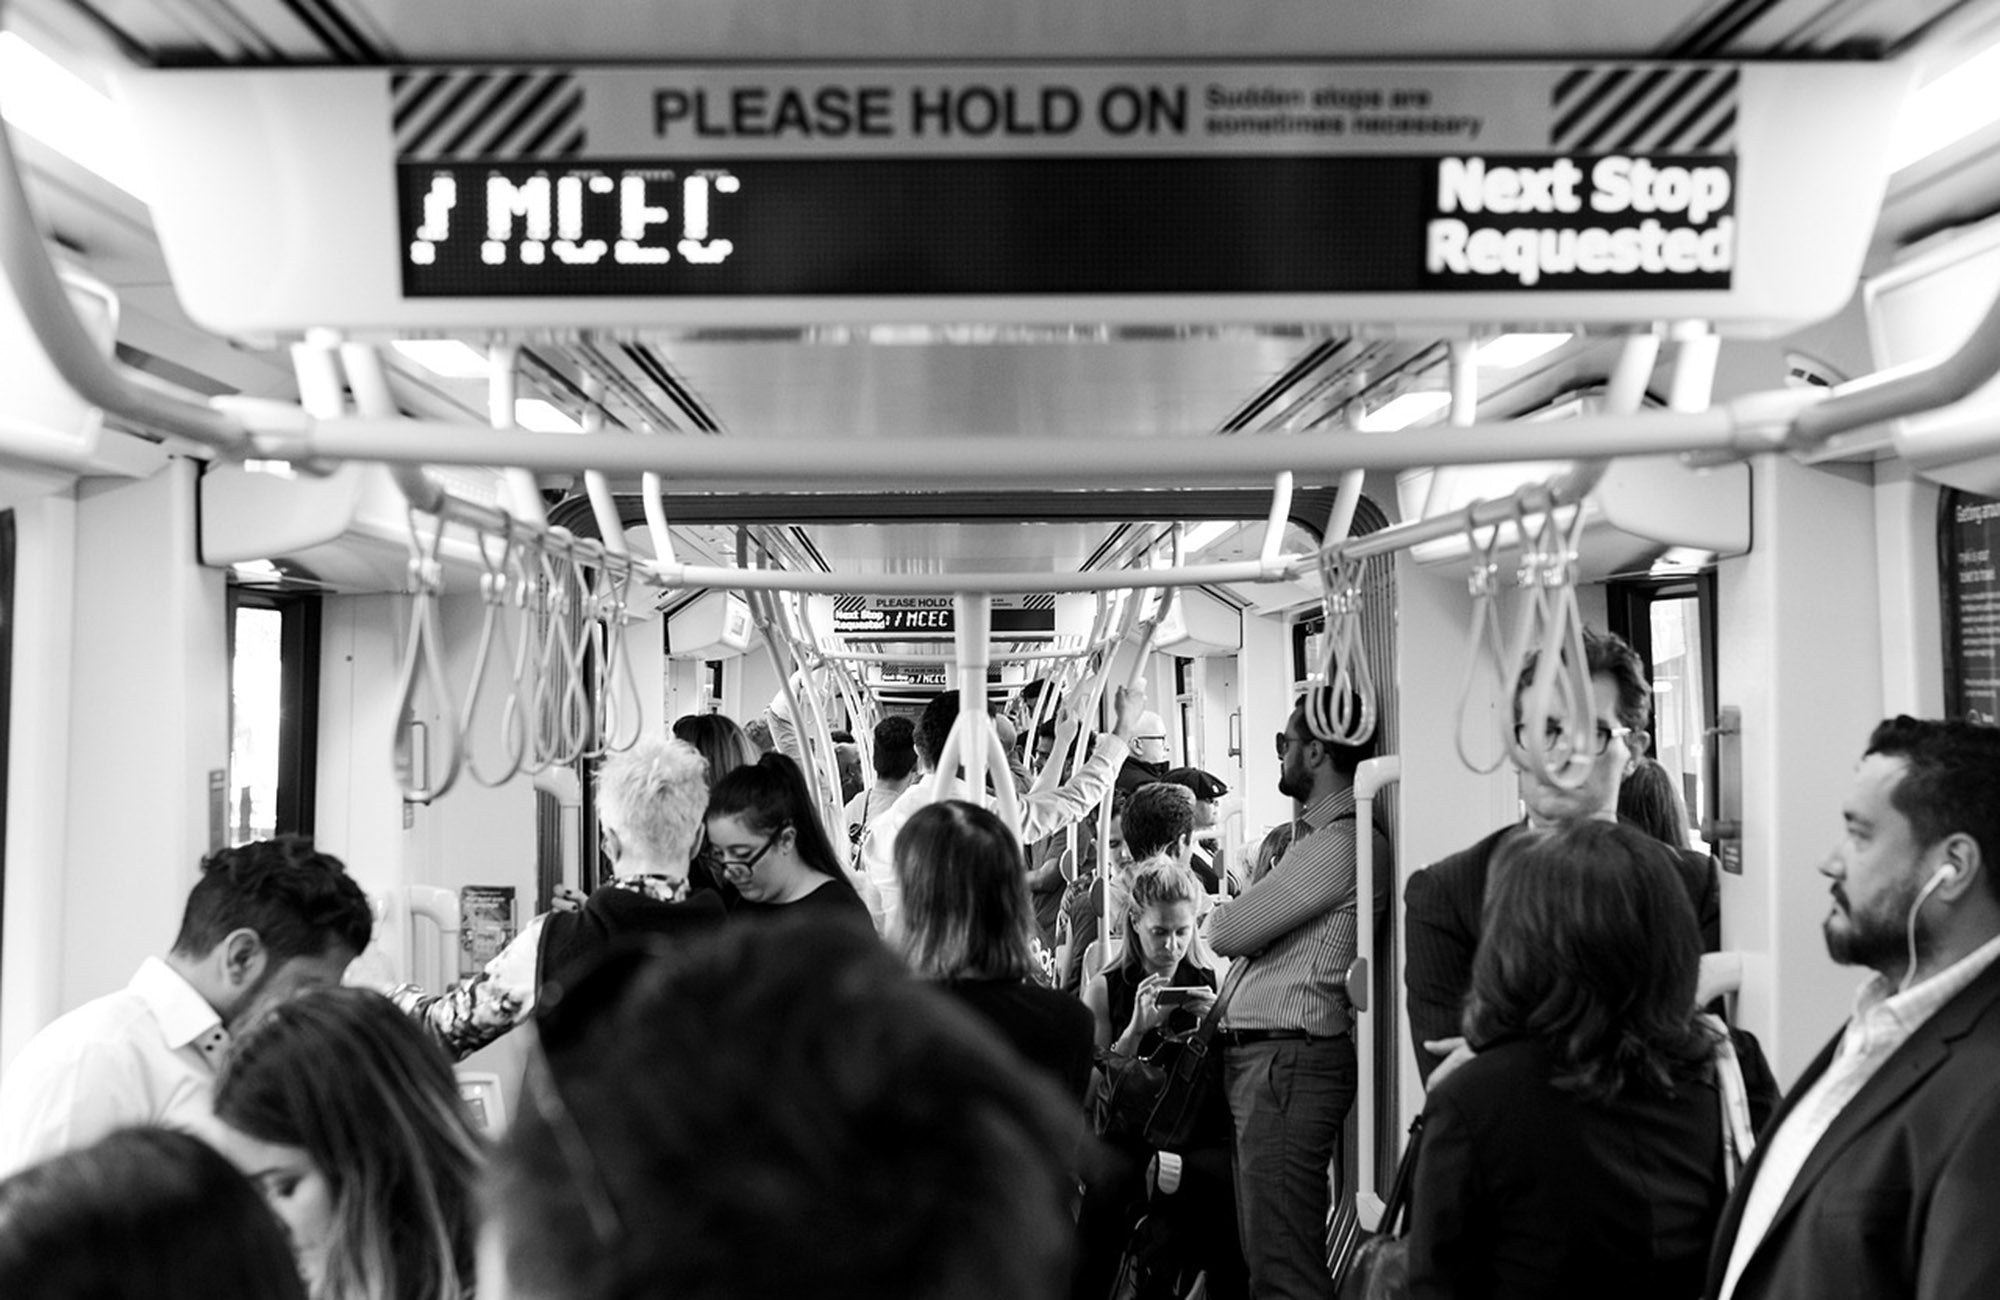 Melbourne tram passengers